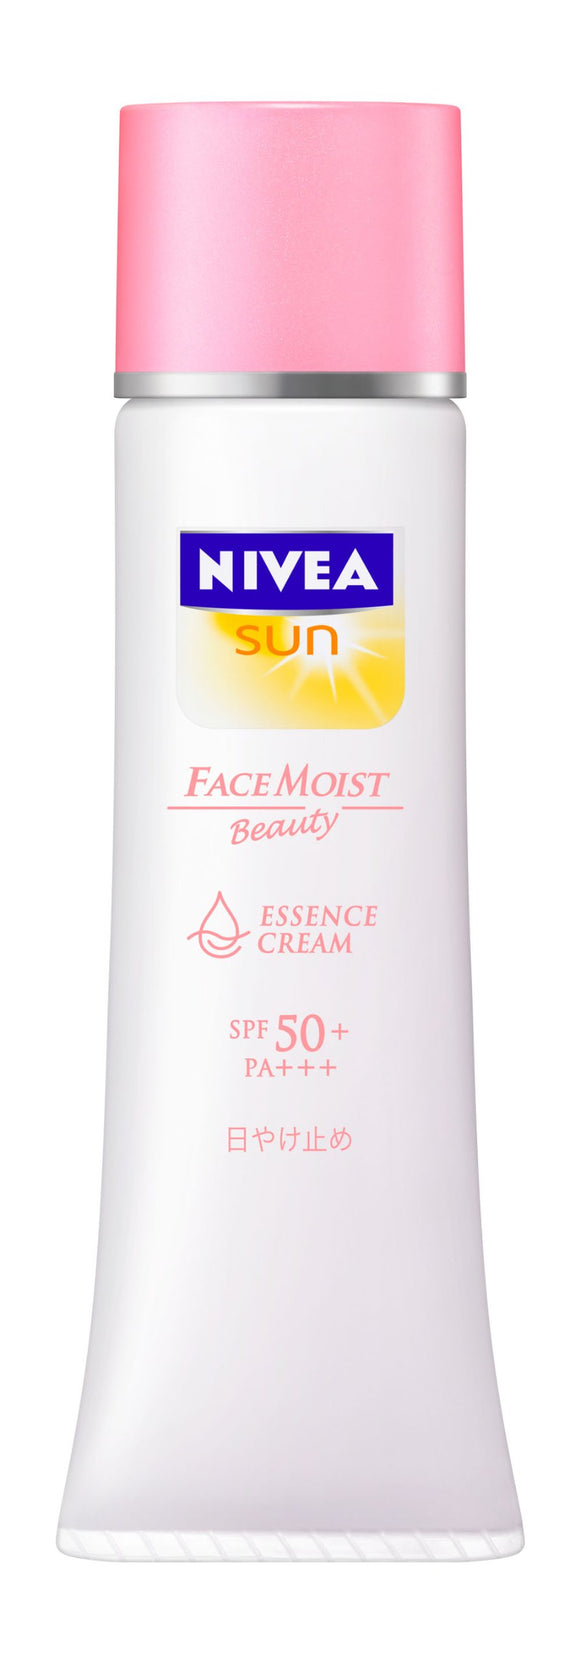 Nivea Sun Face Moist Essence Cream SPF50+ PA+++ 33g